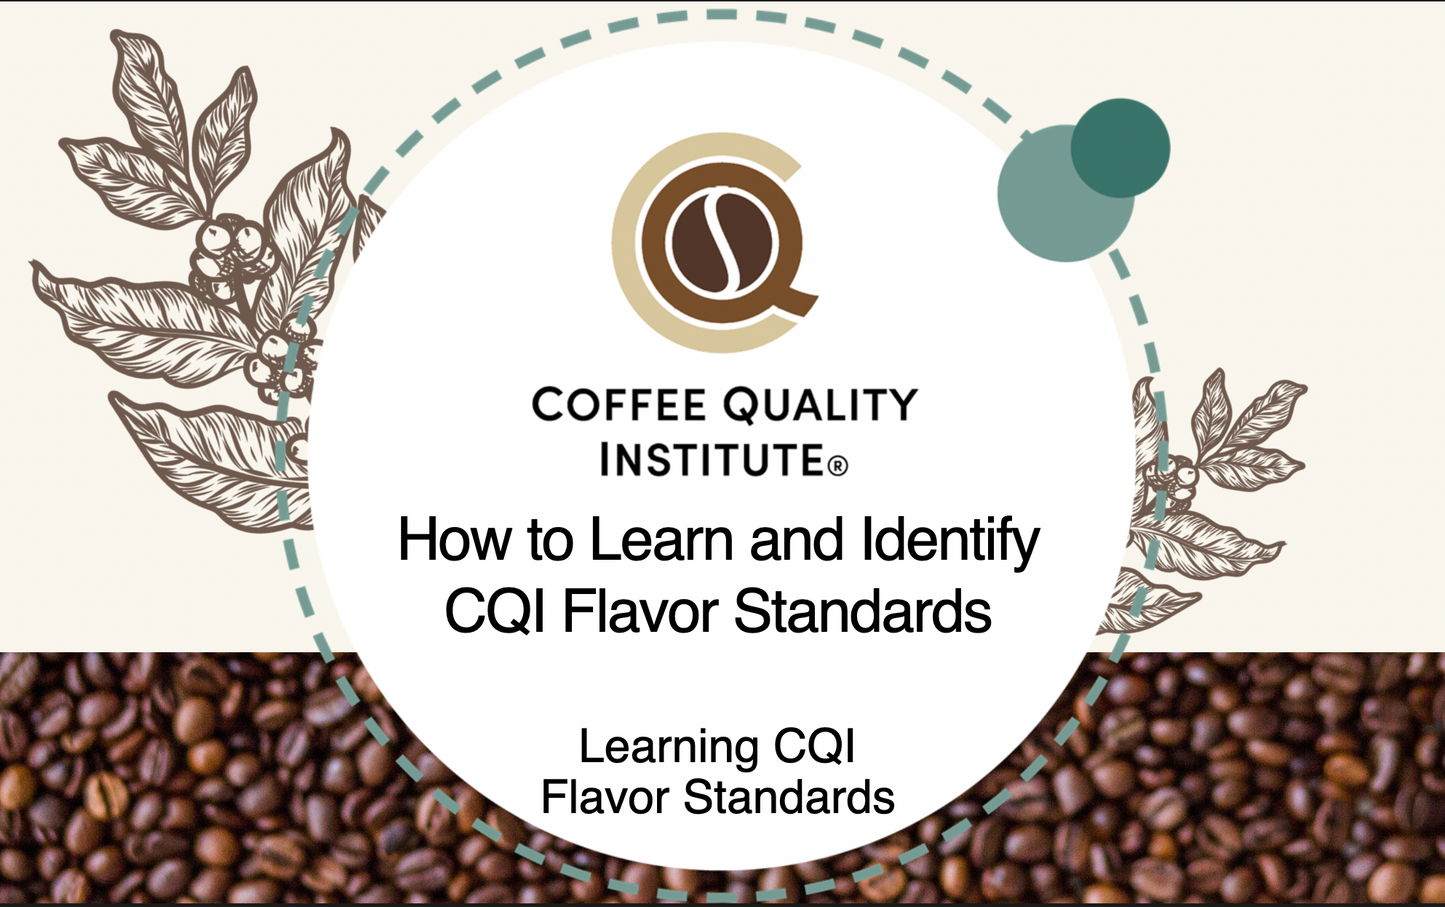 Aprendizaje de estándares de sabor CQI